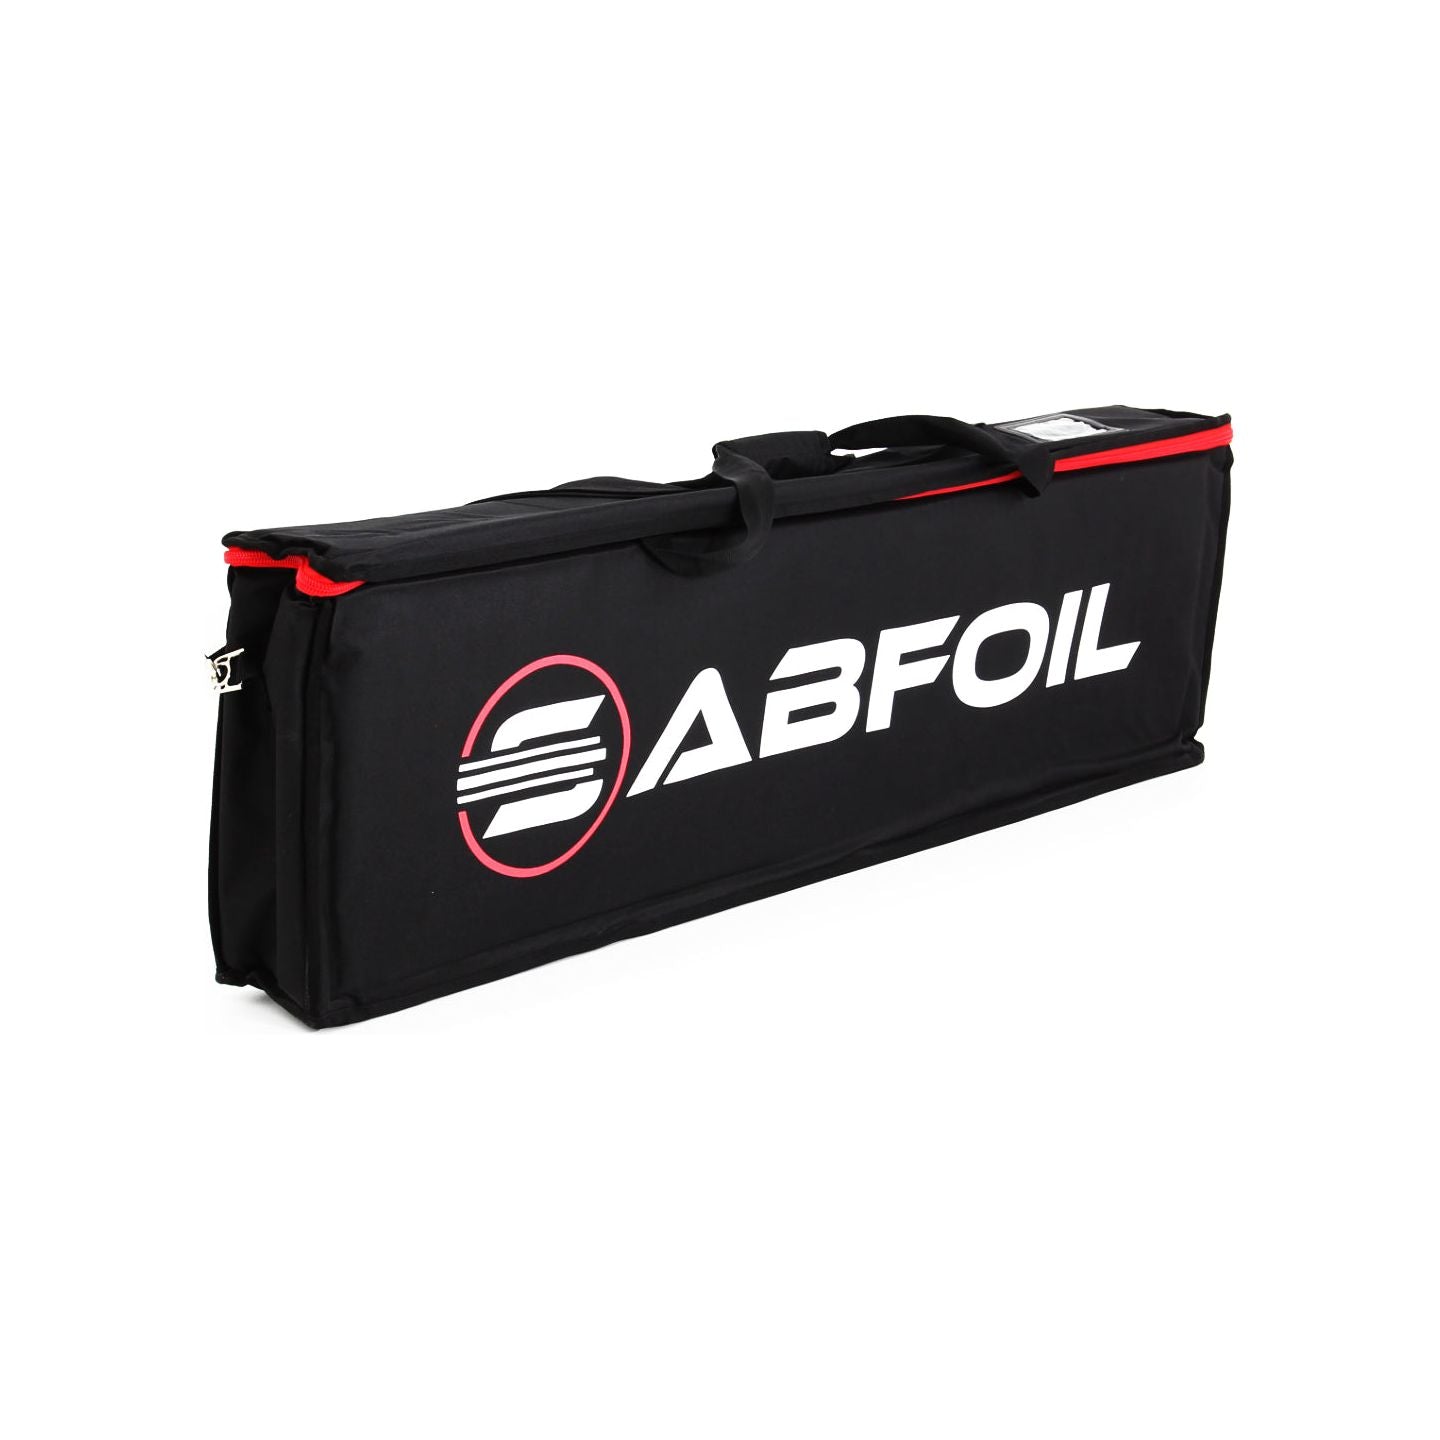 Sabfoil Razor Pro 975/86P | Hydrofoil Set